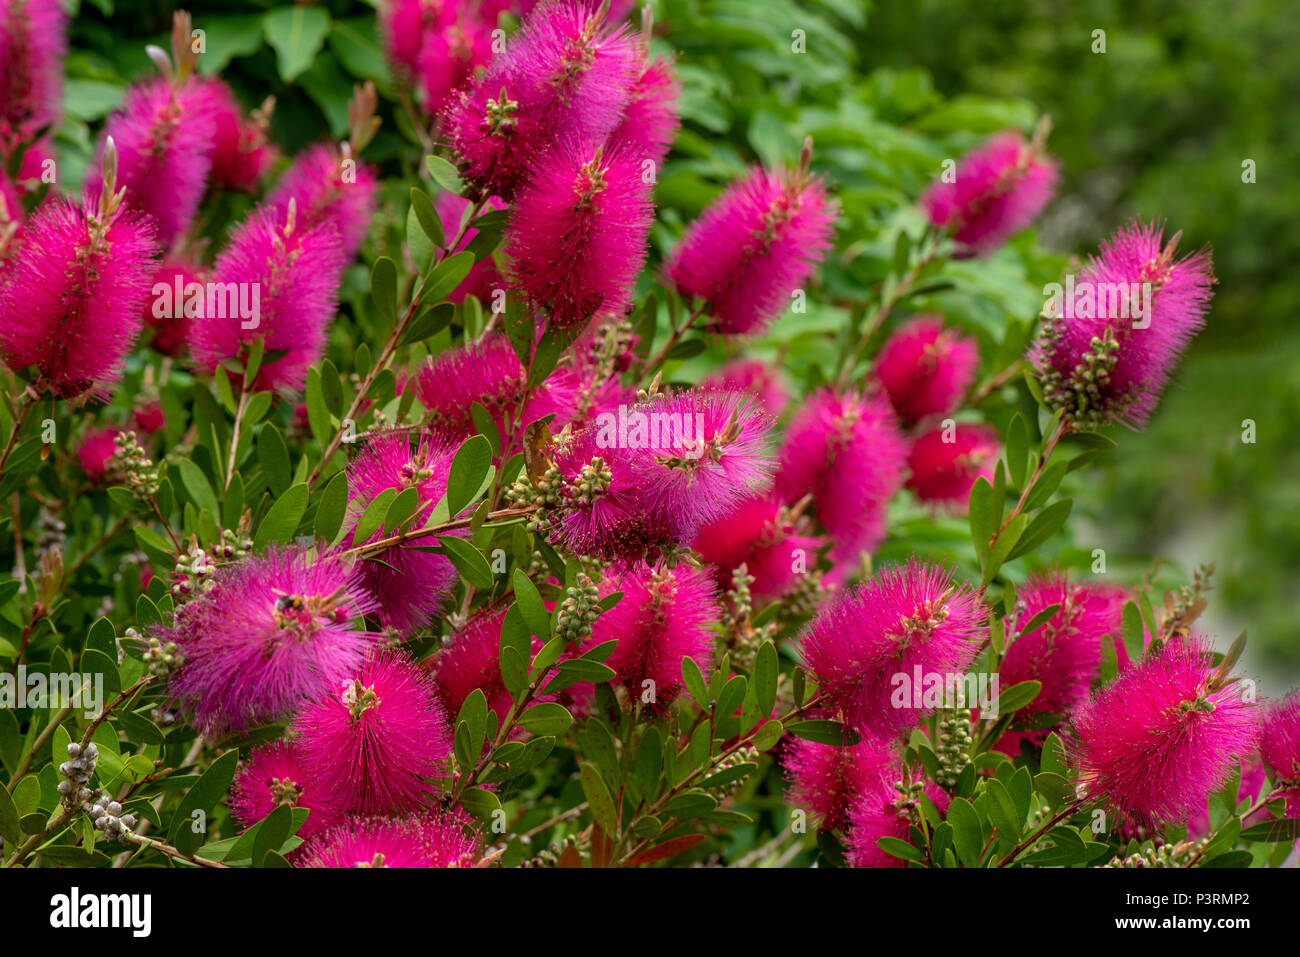 The Vibrant pink flowers of the summer flowering shrub Callistemon viminalis 'Hot Pink' also known as the Bottlebrush plant Stock Photo